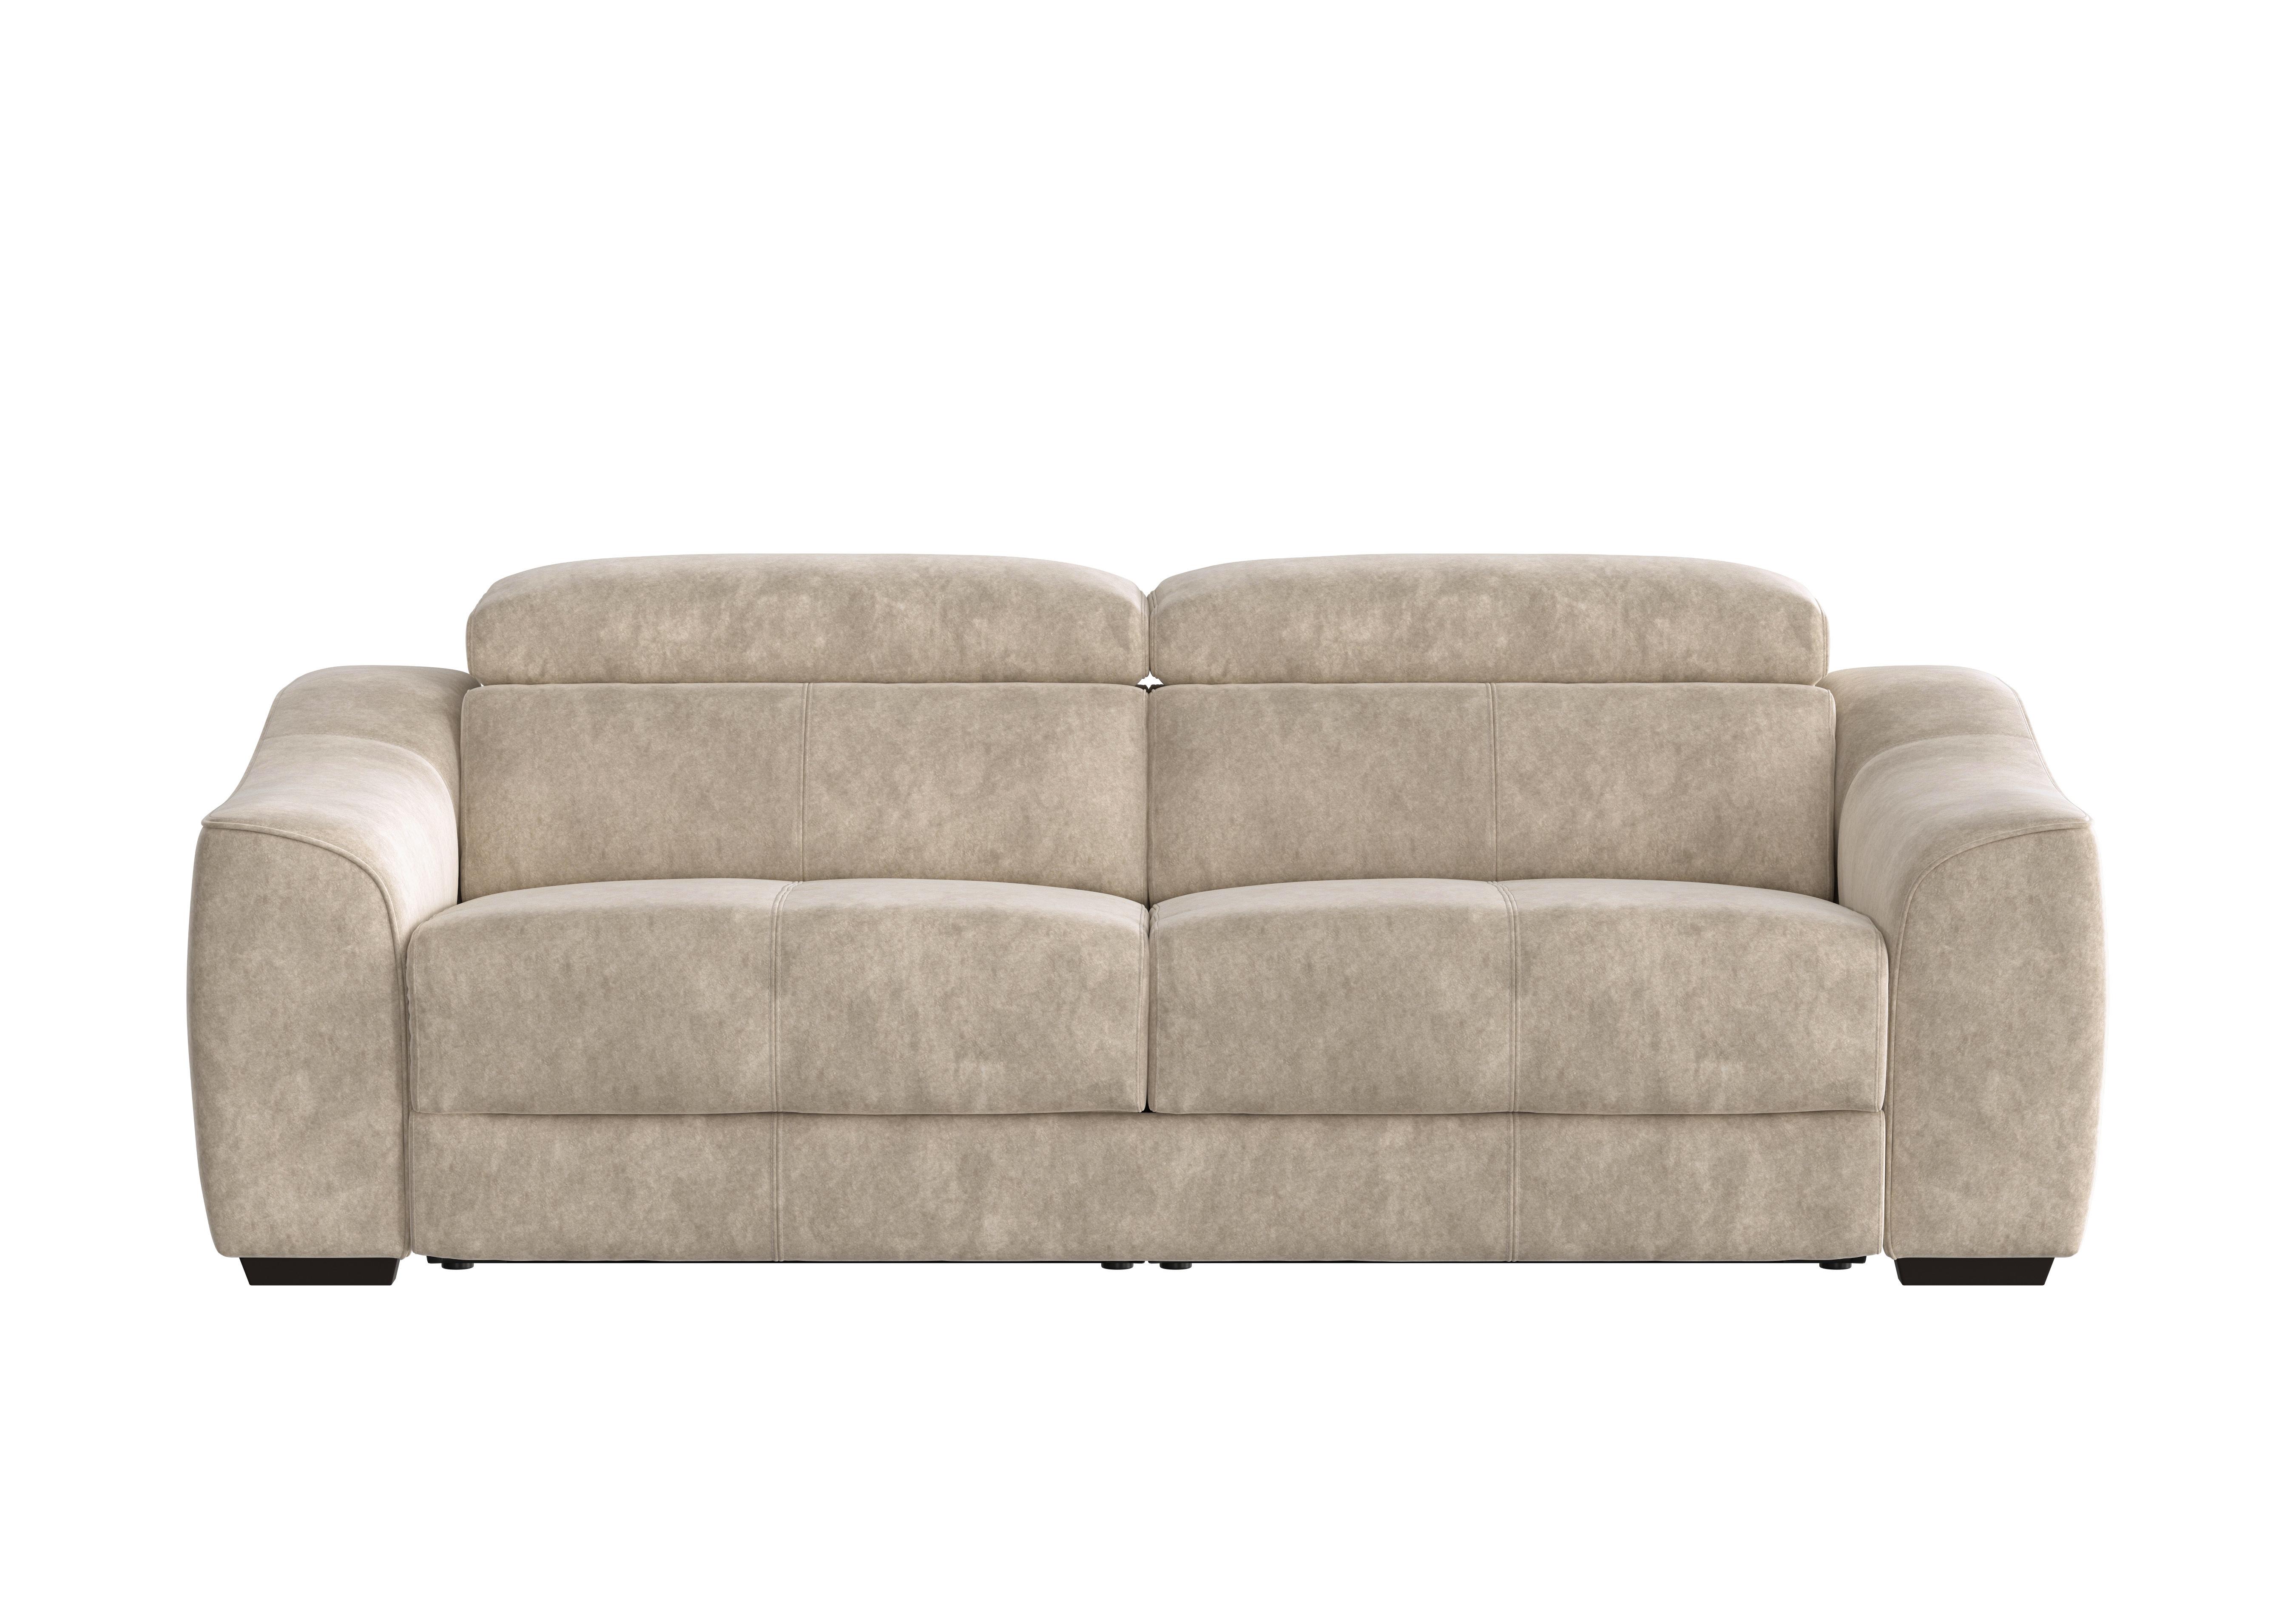 Elixir 3 Seater Fabric Sofa Bed in Bfa-Bnn-R26 Fv2 Cream on Furniture Village